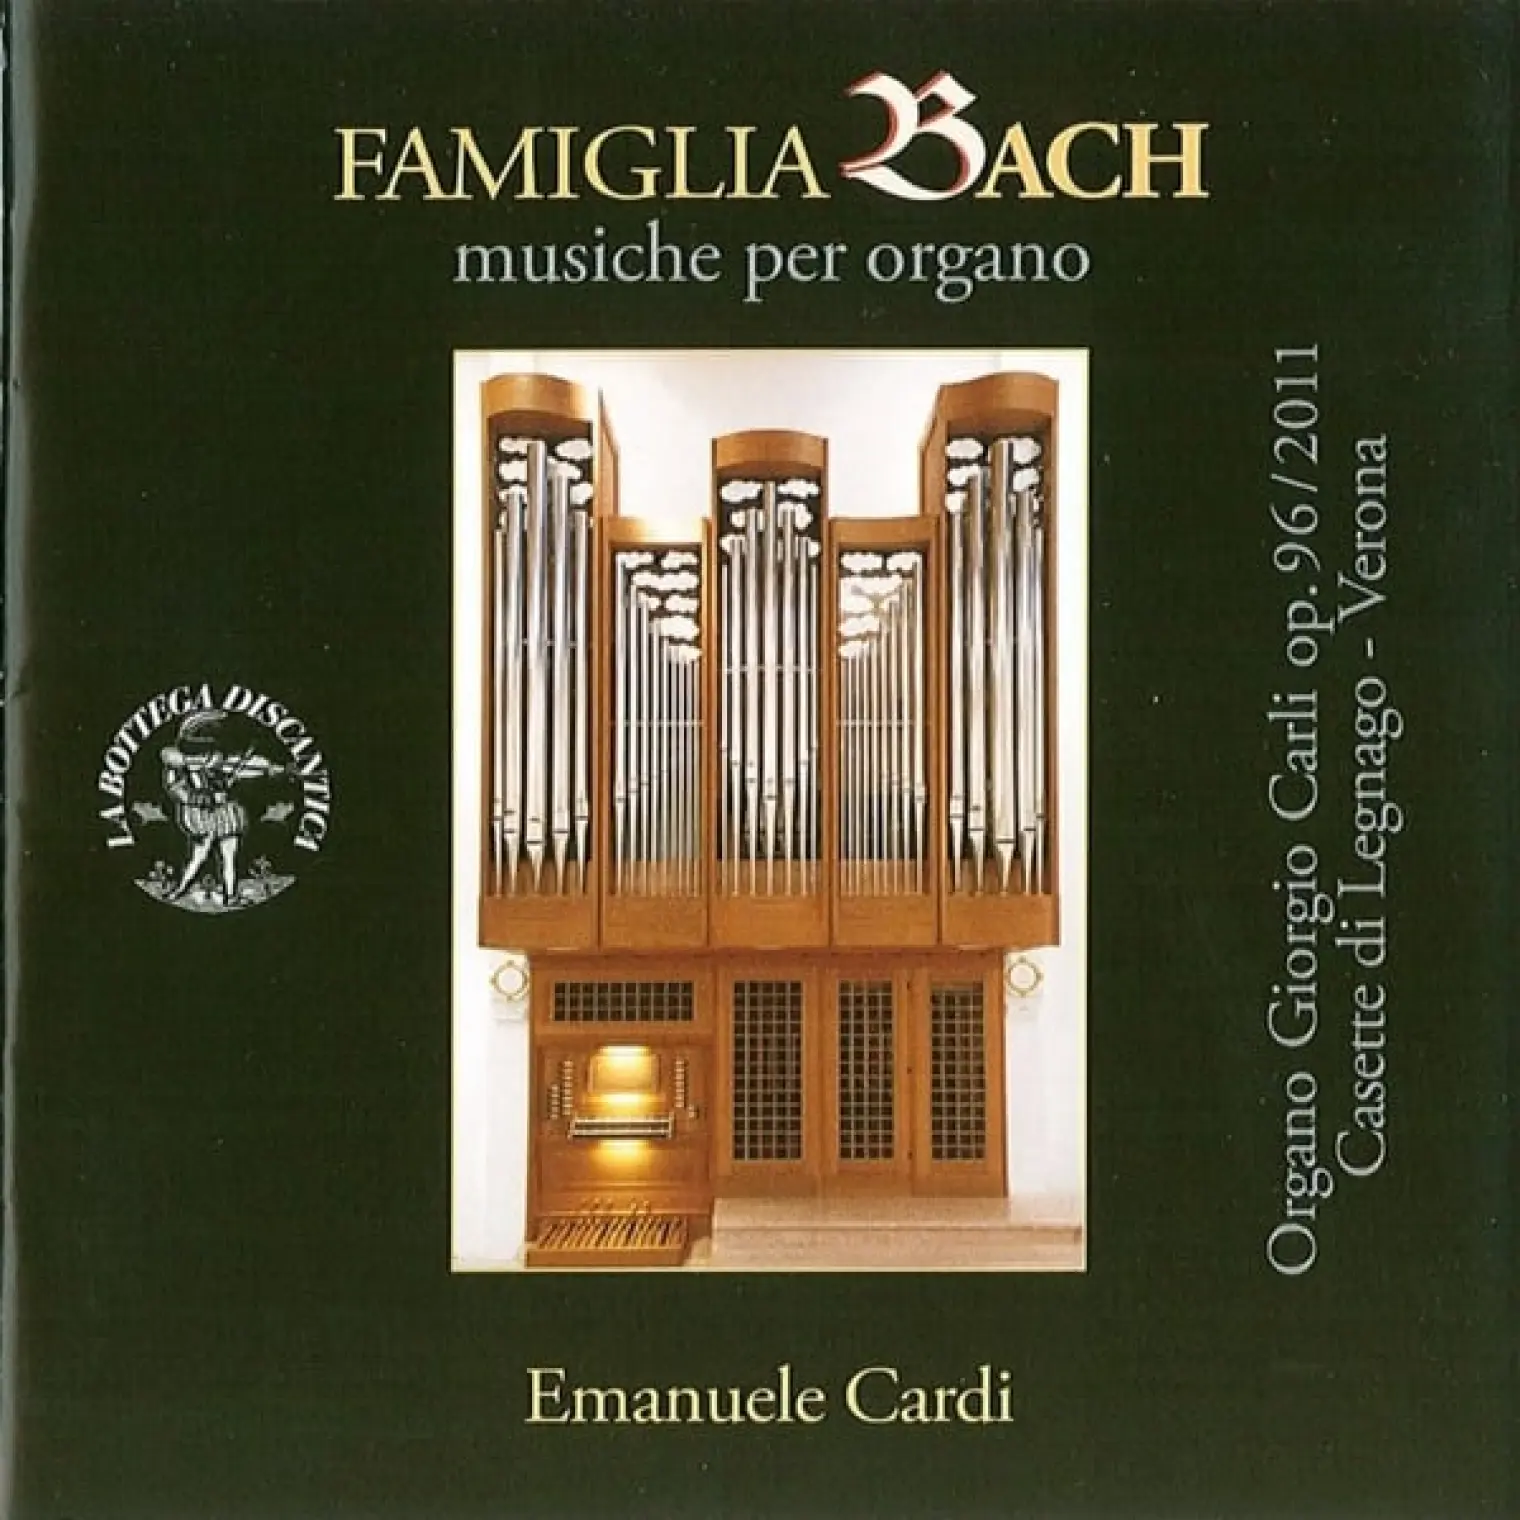 Famiglia bach: Musiche per organo - organo giorgio carli, op. 96 (2001) casette di legnago, verona -  Emanuele Cardi 